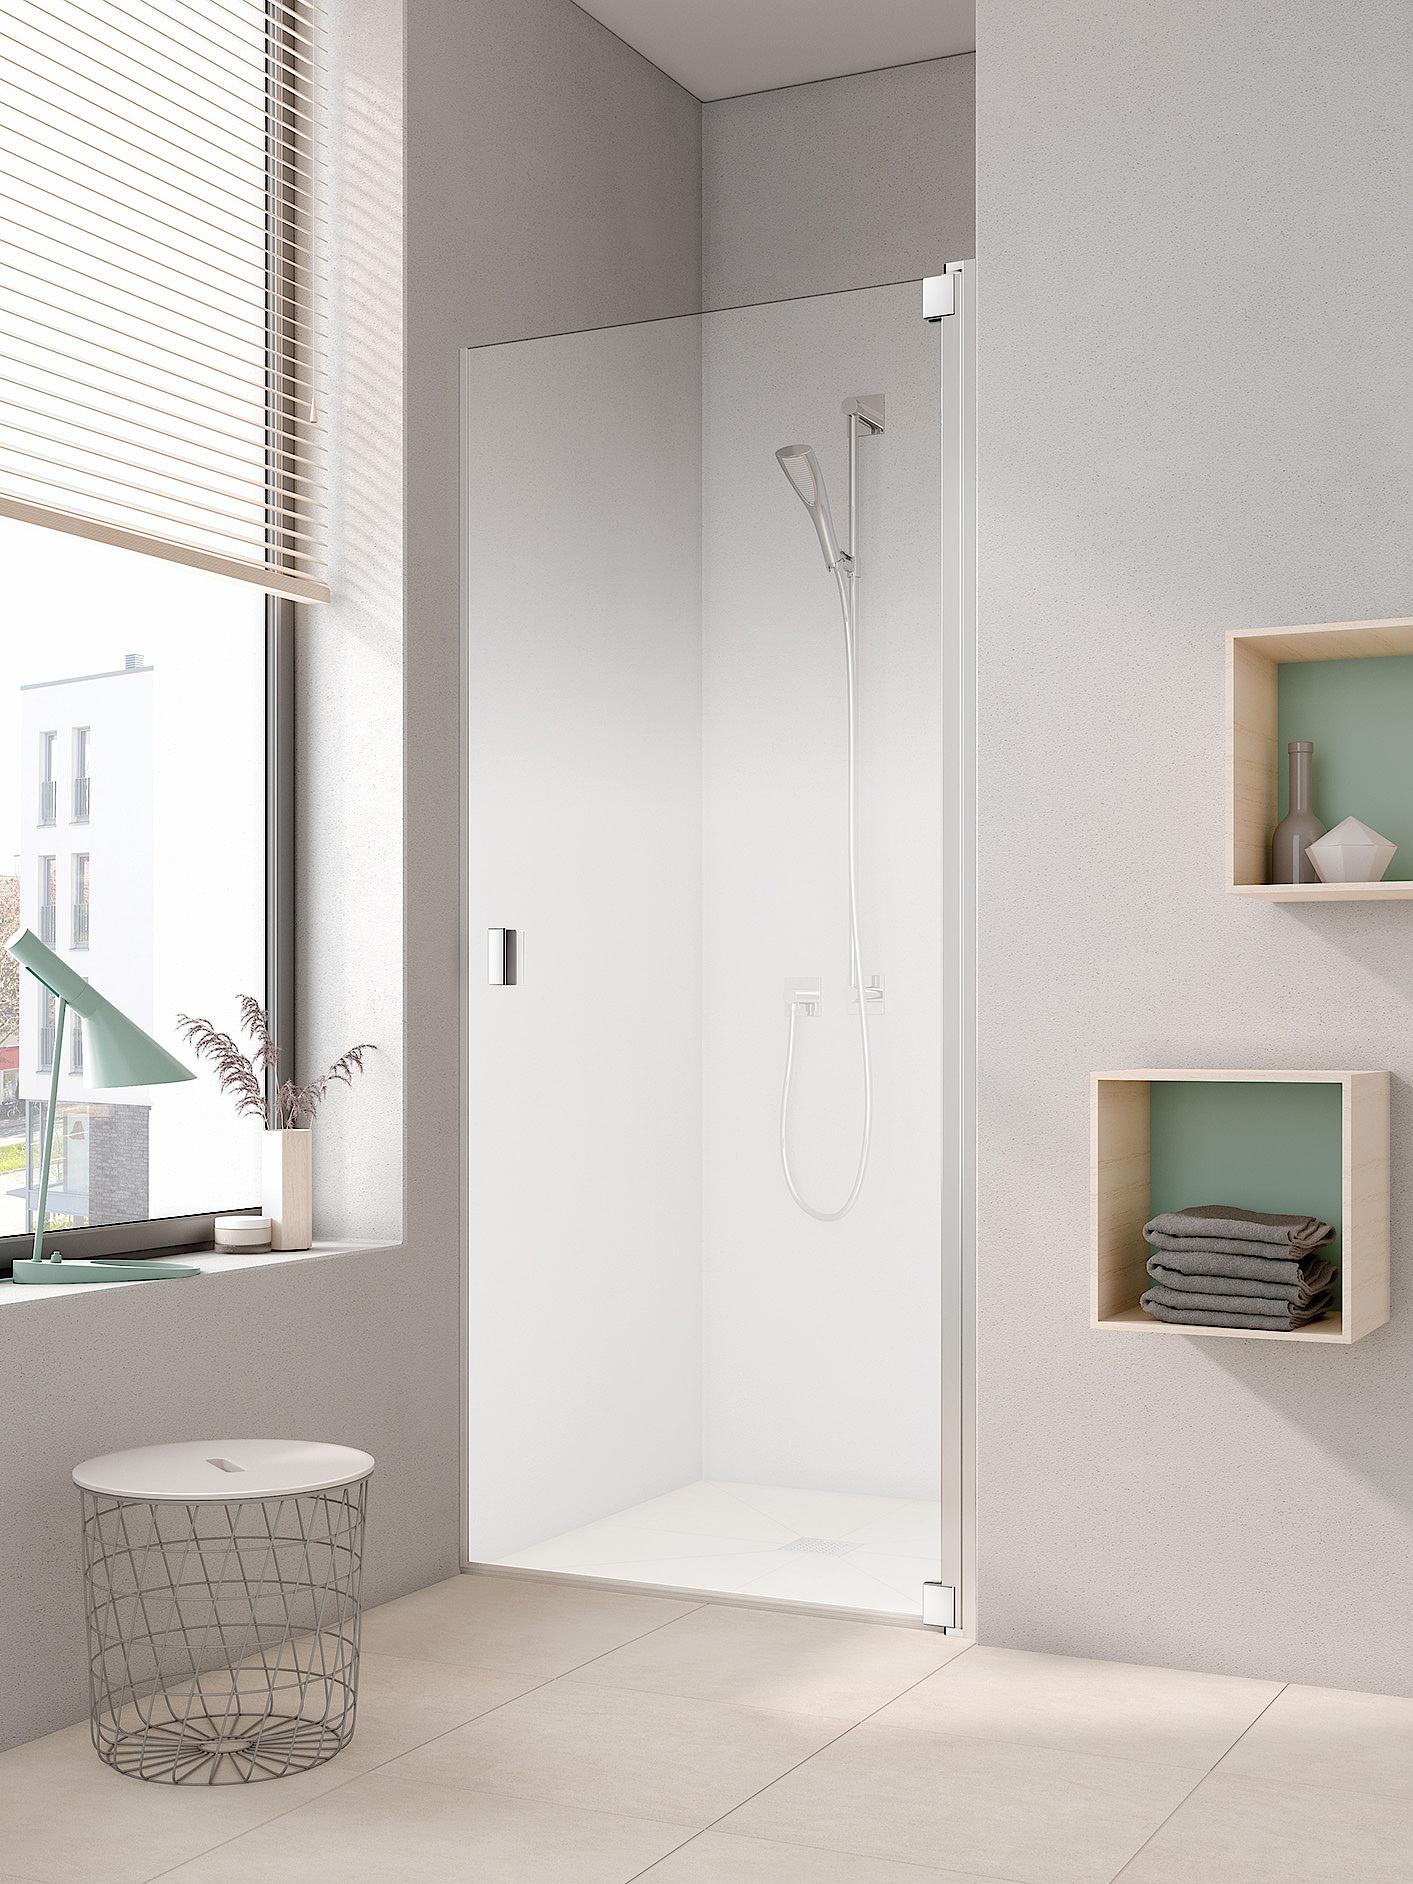 Kermi profile shower enclosure, RAYA single panel hinged door with decor 3